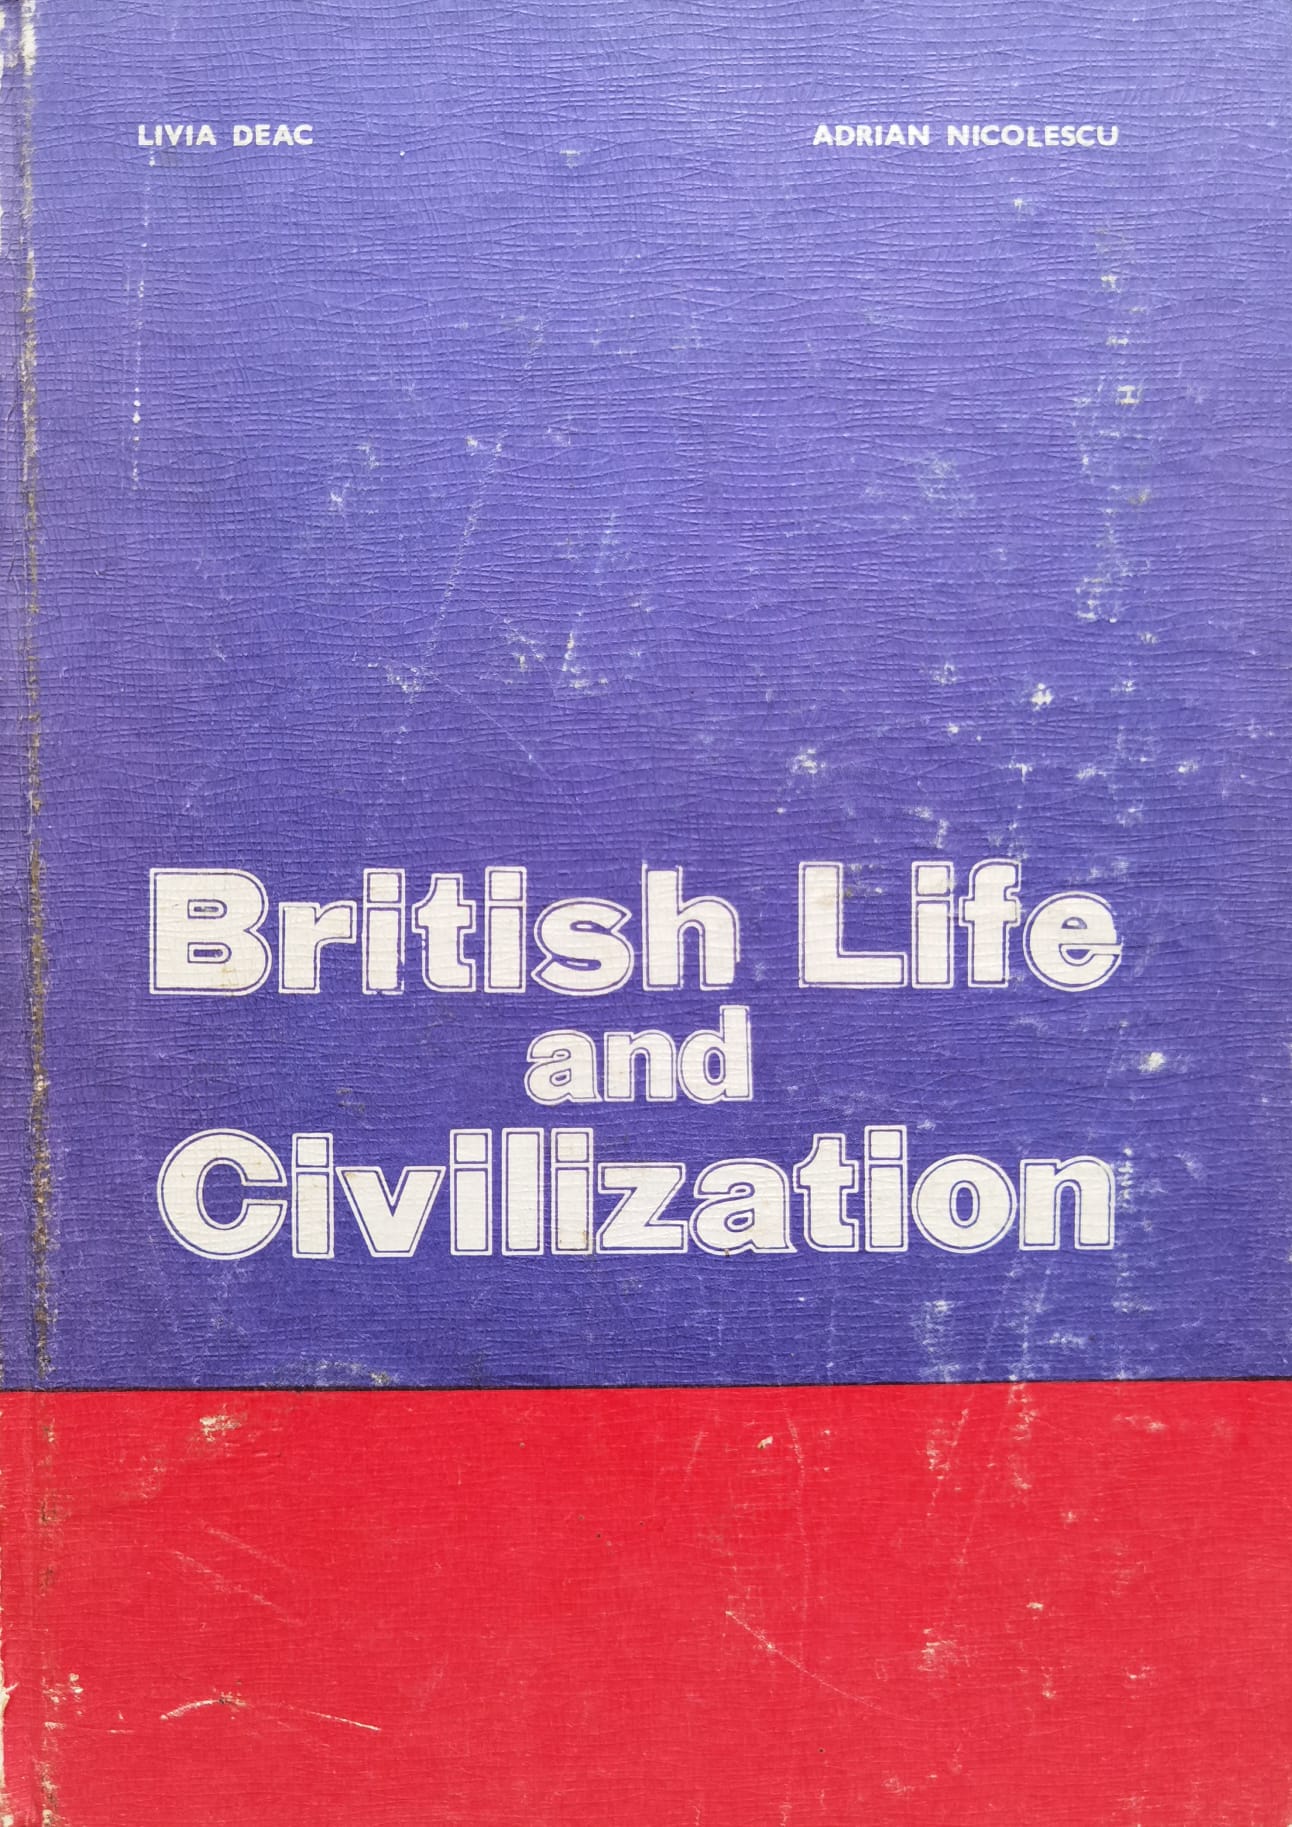 british life and civilization                                                                        livia deac adrian nicolescu                                                                         